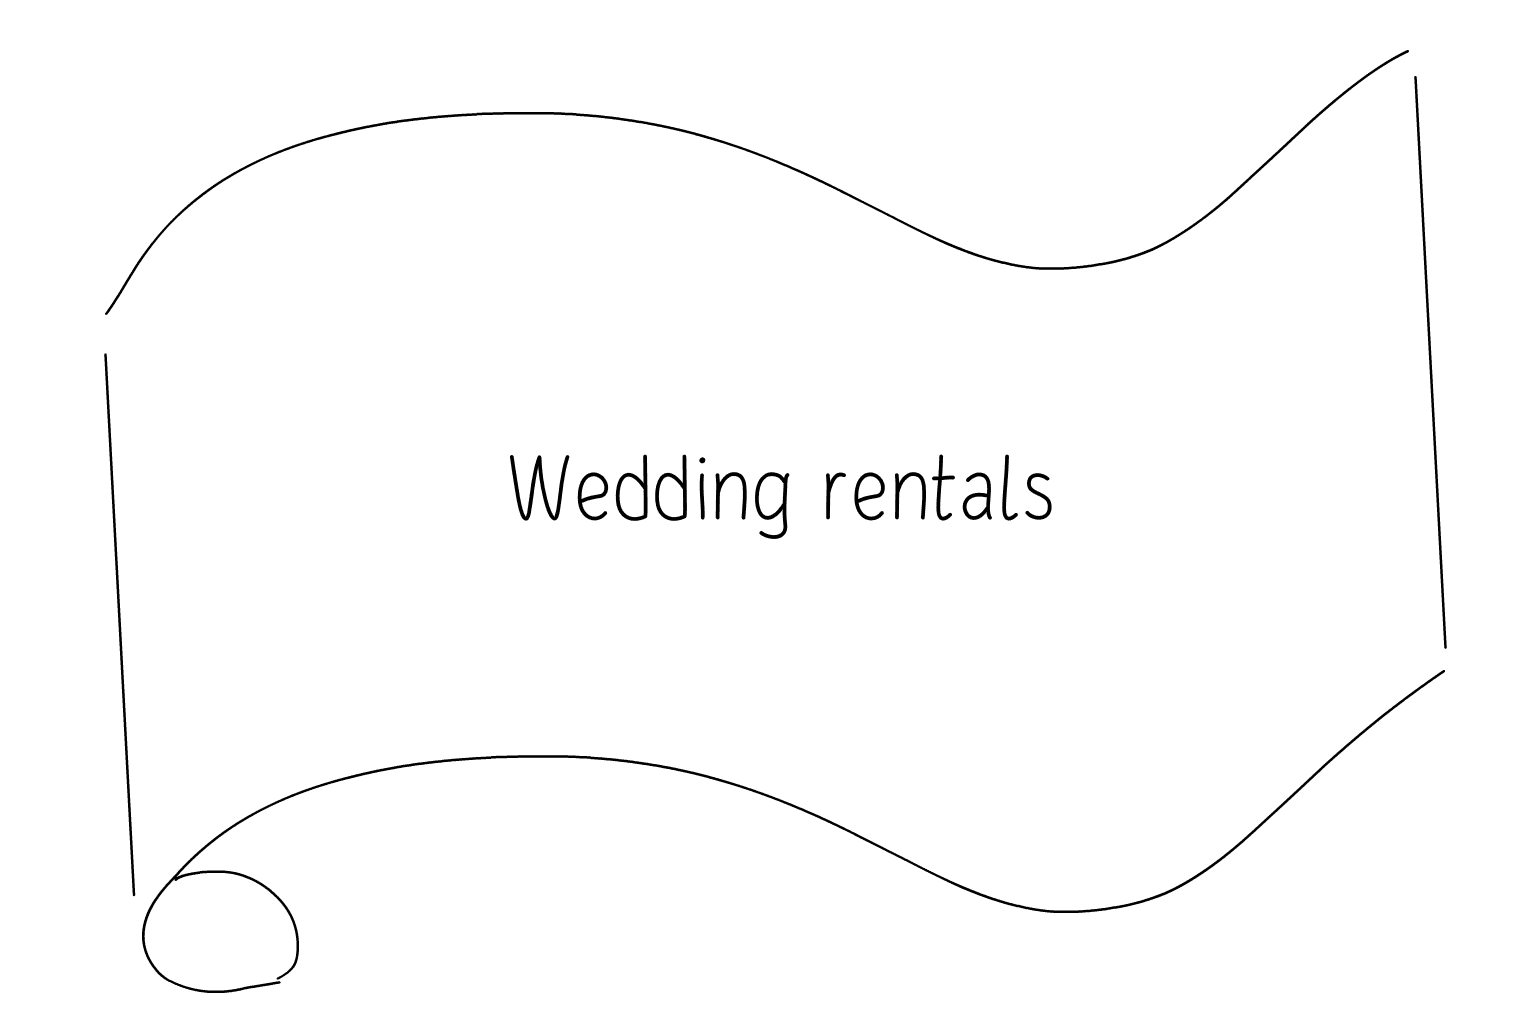 Illustration of Event Rentals